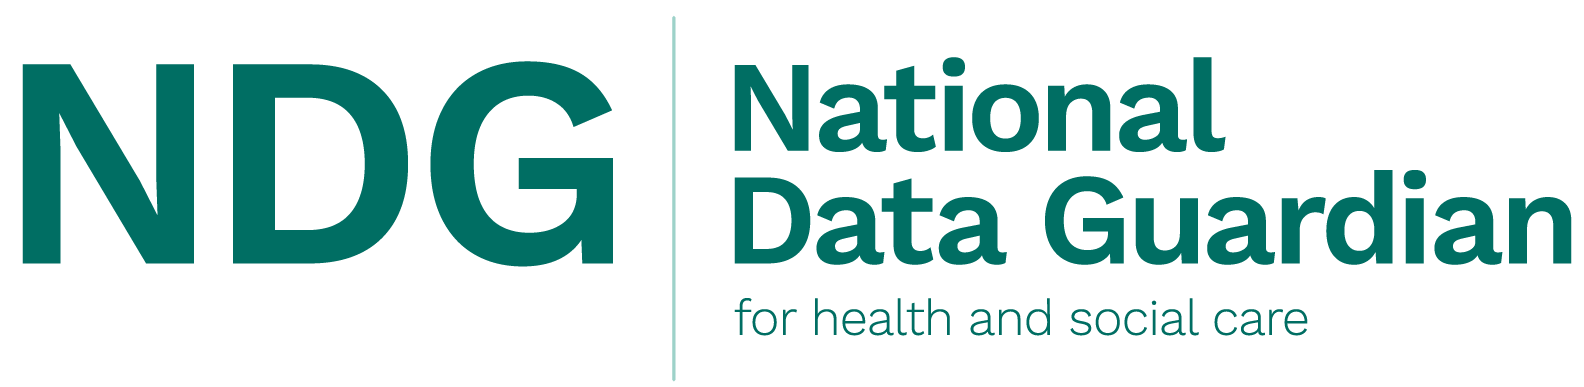 National Data Guardian